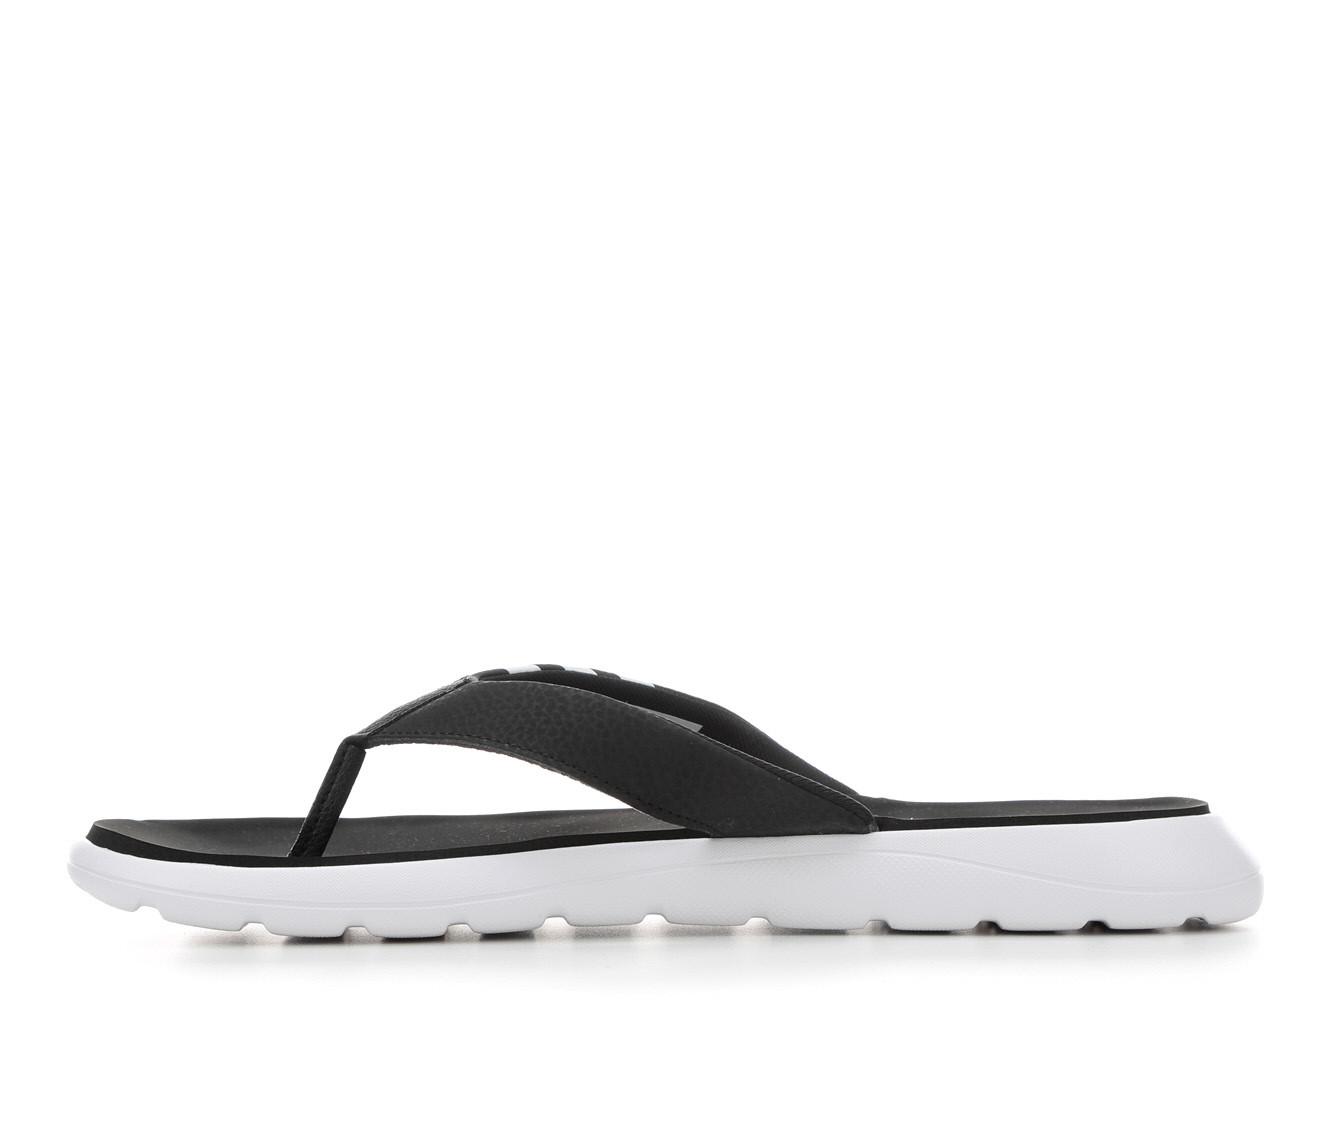 Adidas Cloudfoam Flip-Flops | Shoe